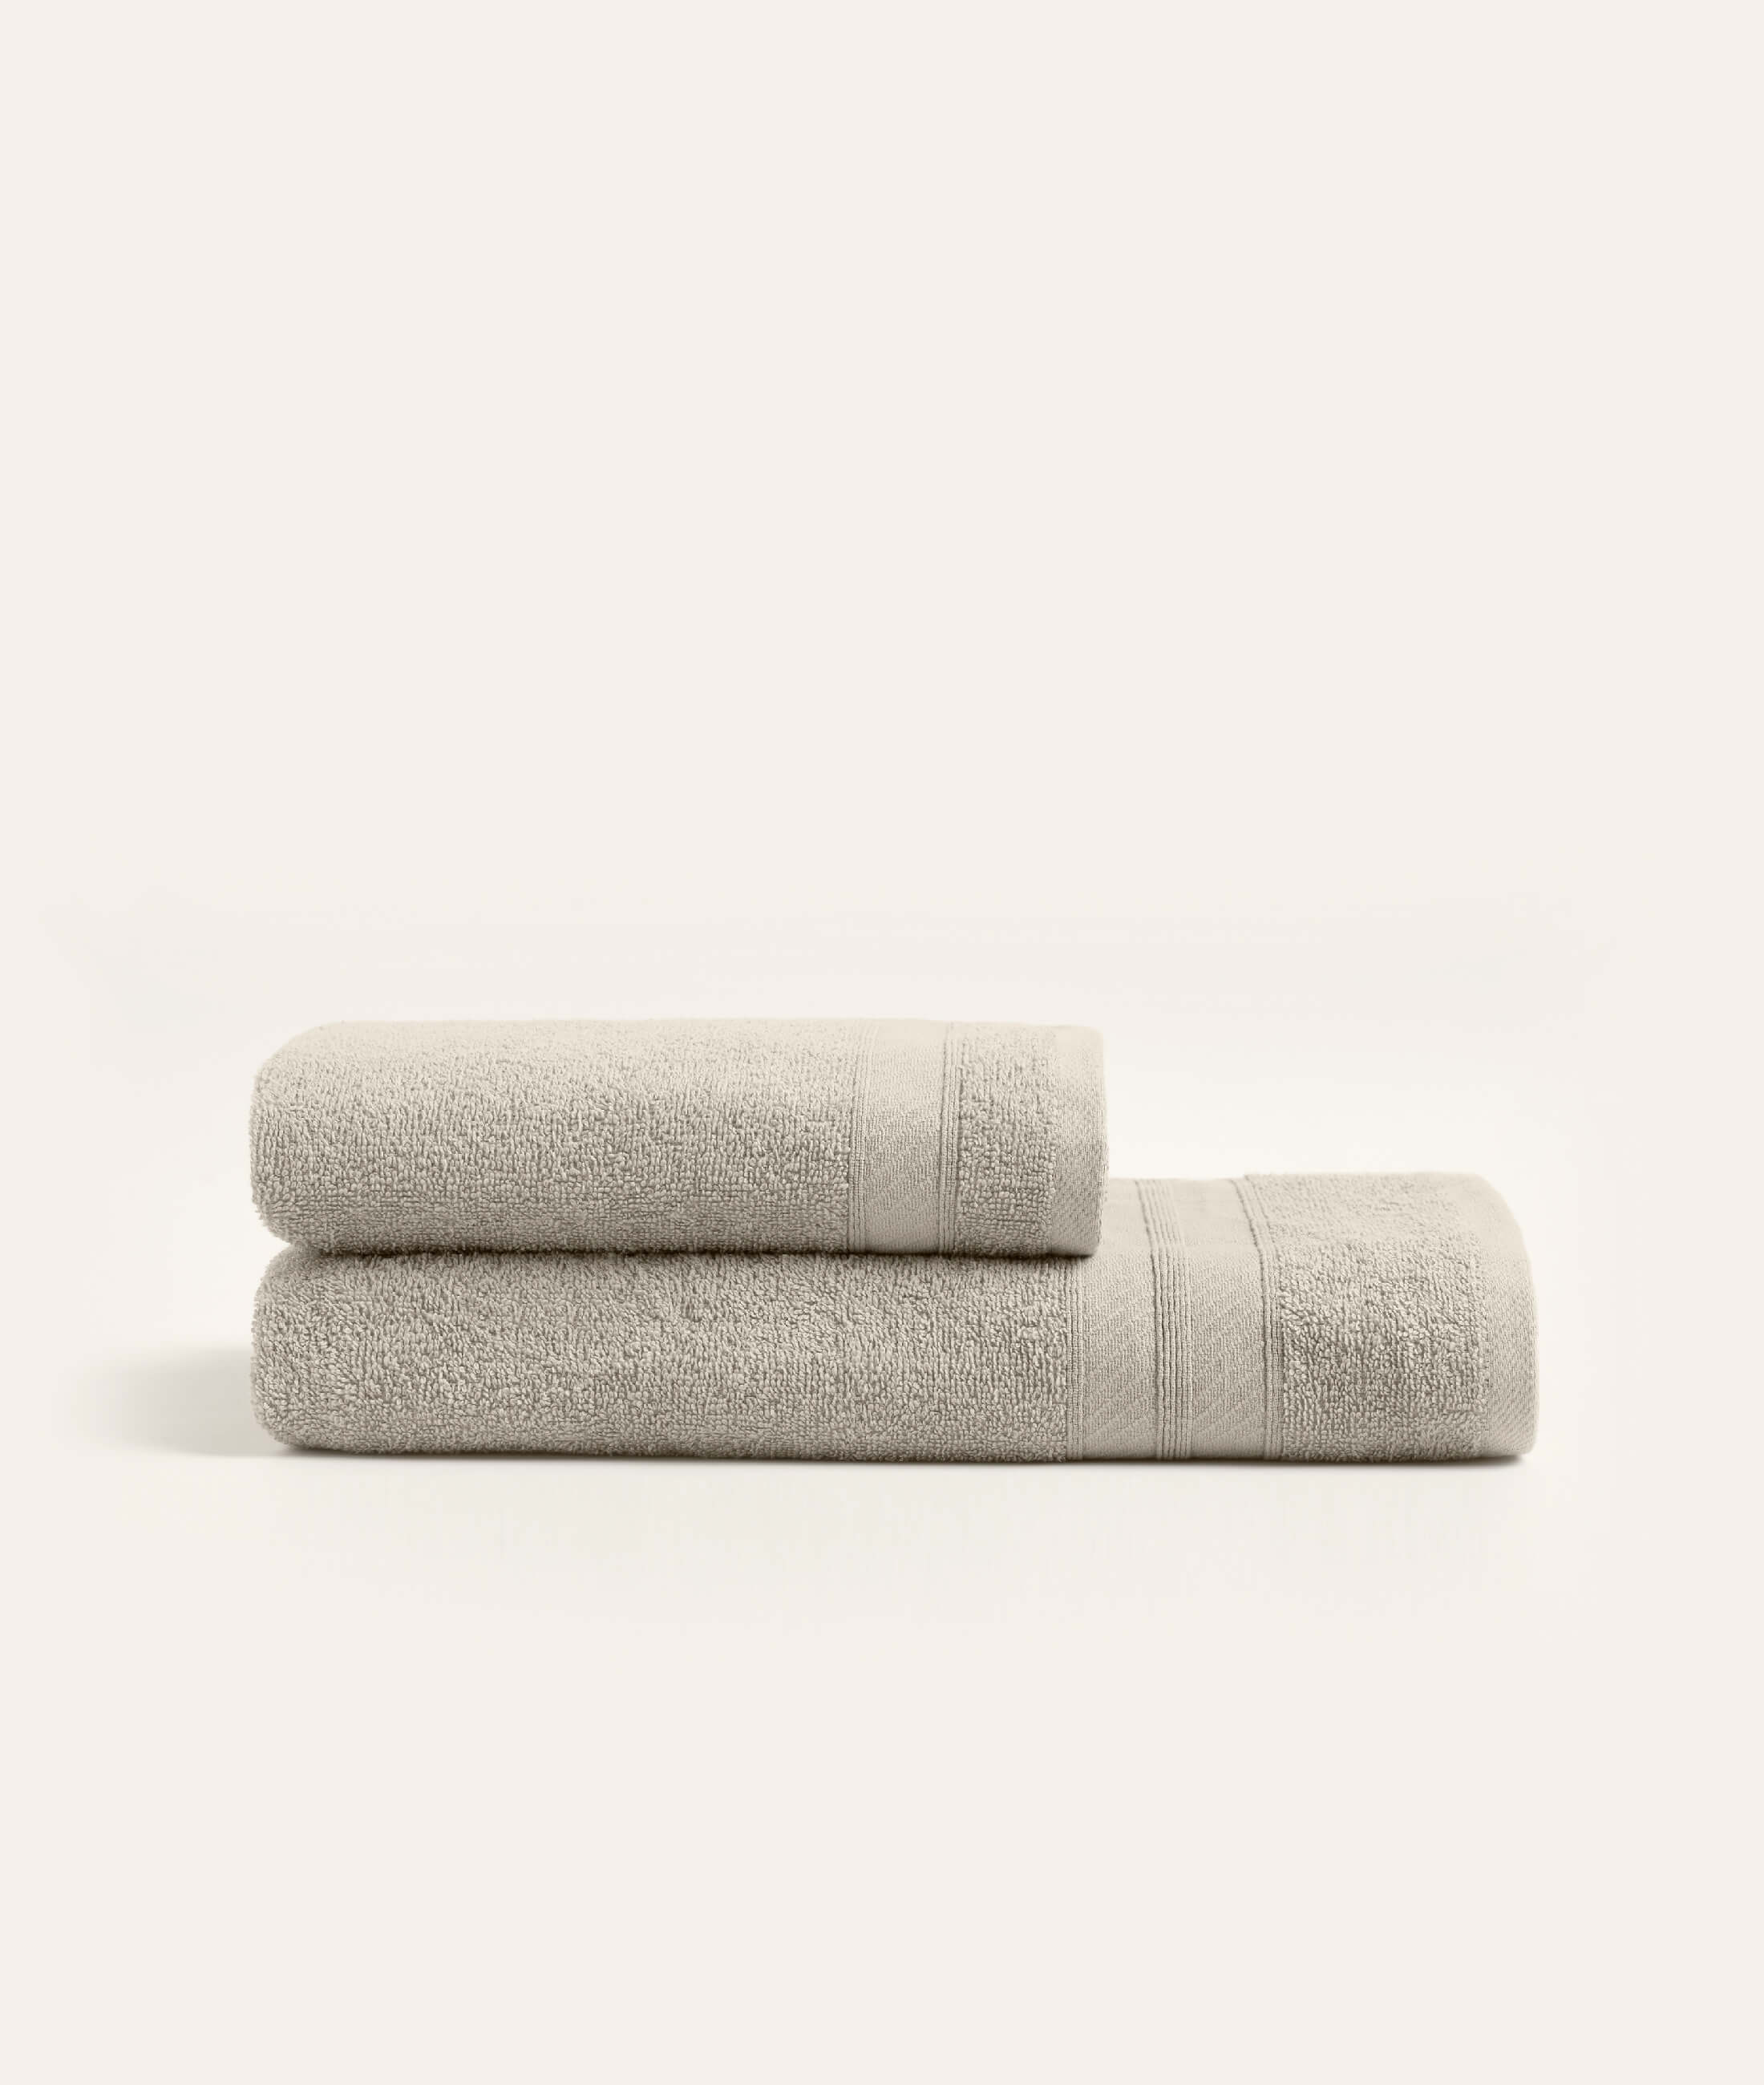 Lycian Bordered Mink 2-Piece Towel Set 1005A